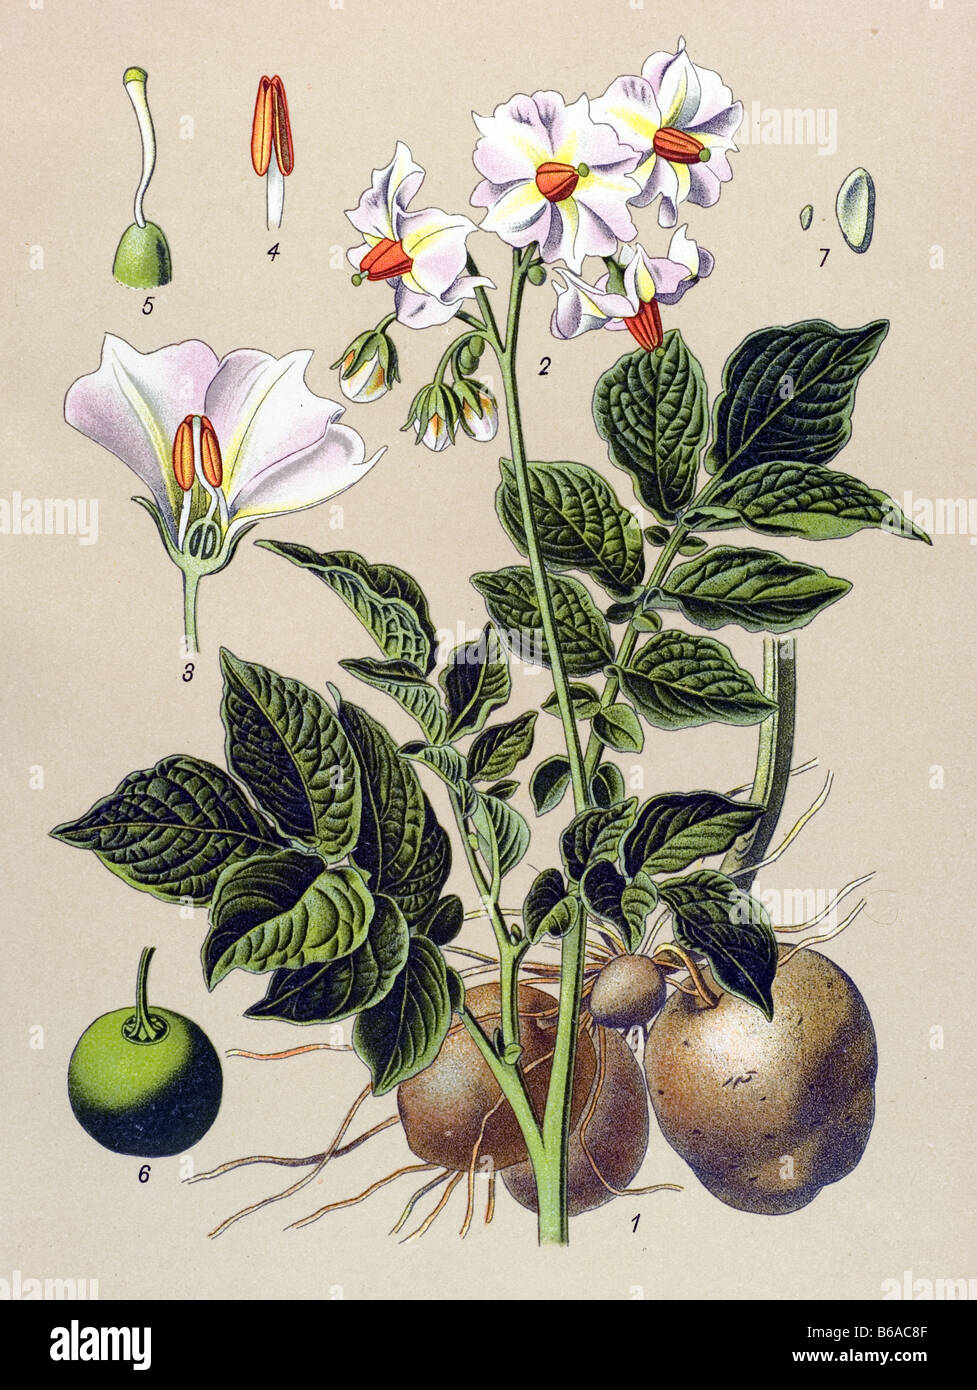 Potato, Solanum tuberosum poisonous plants illustrations Stock Photo